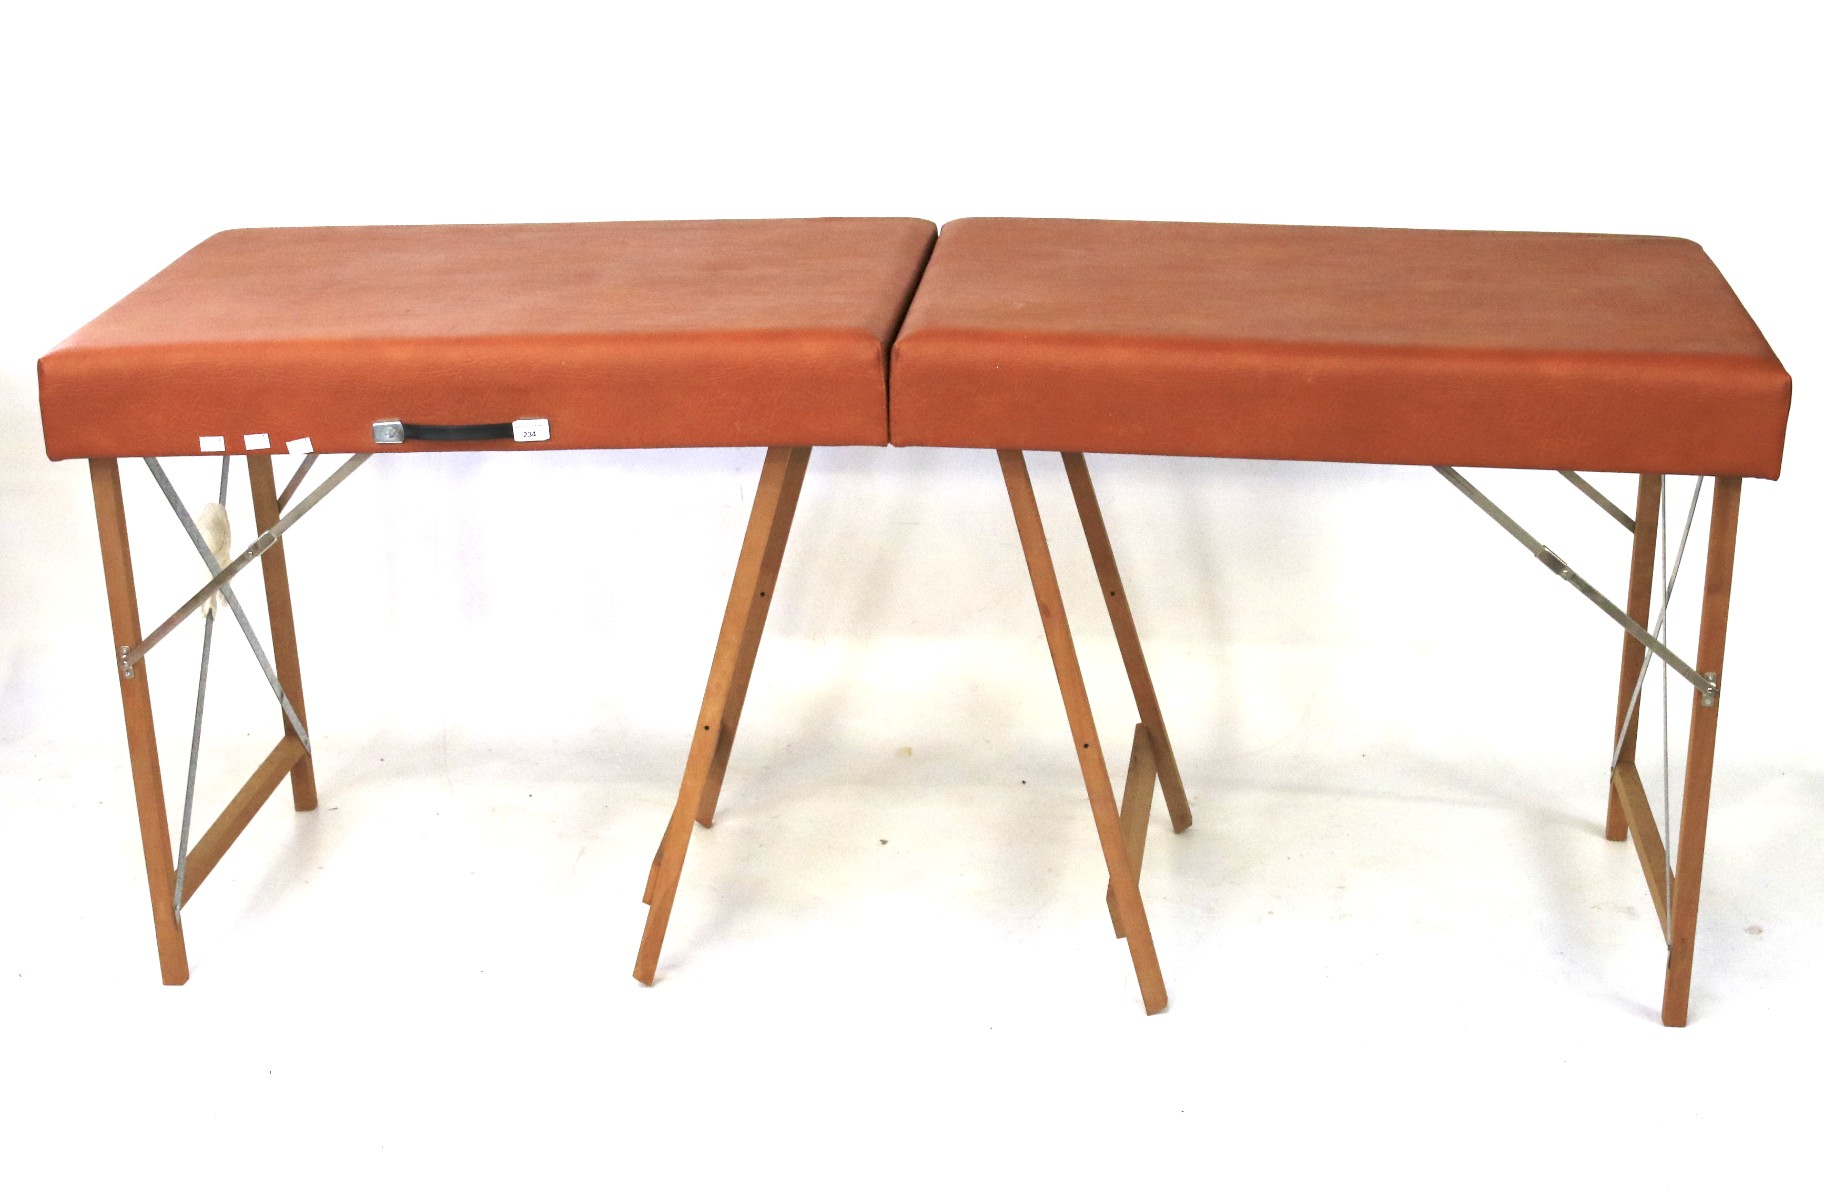 A vintage portable folding massage table